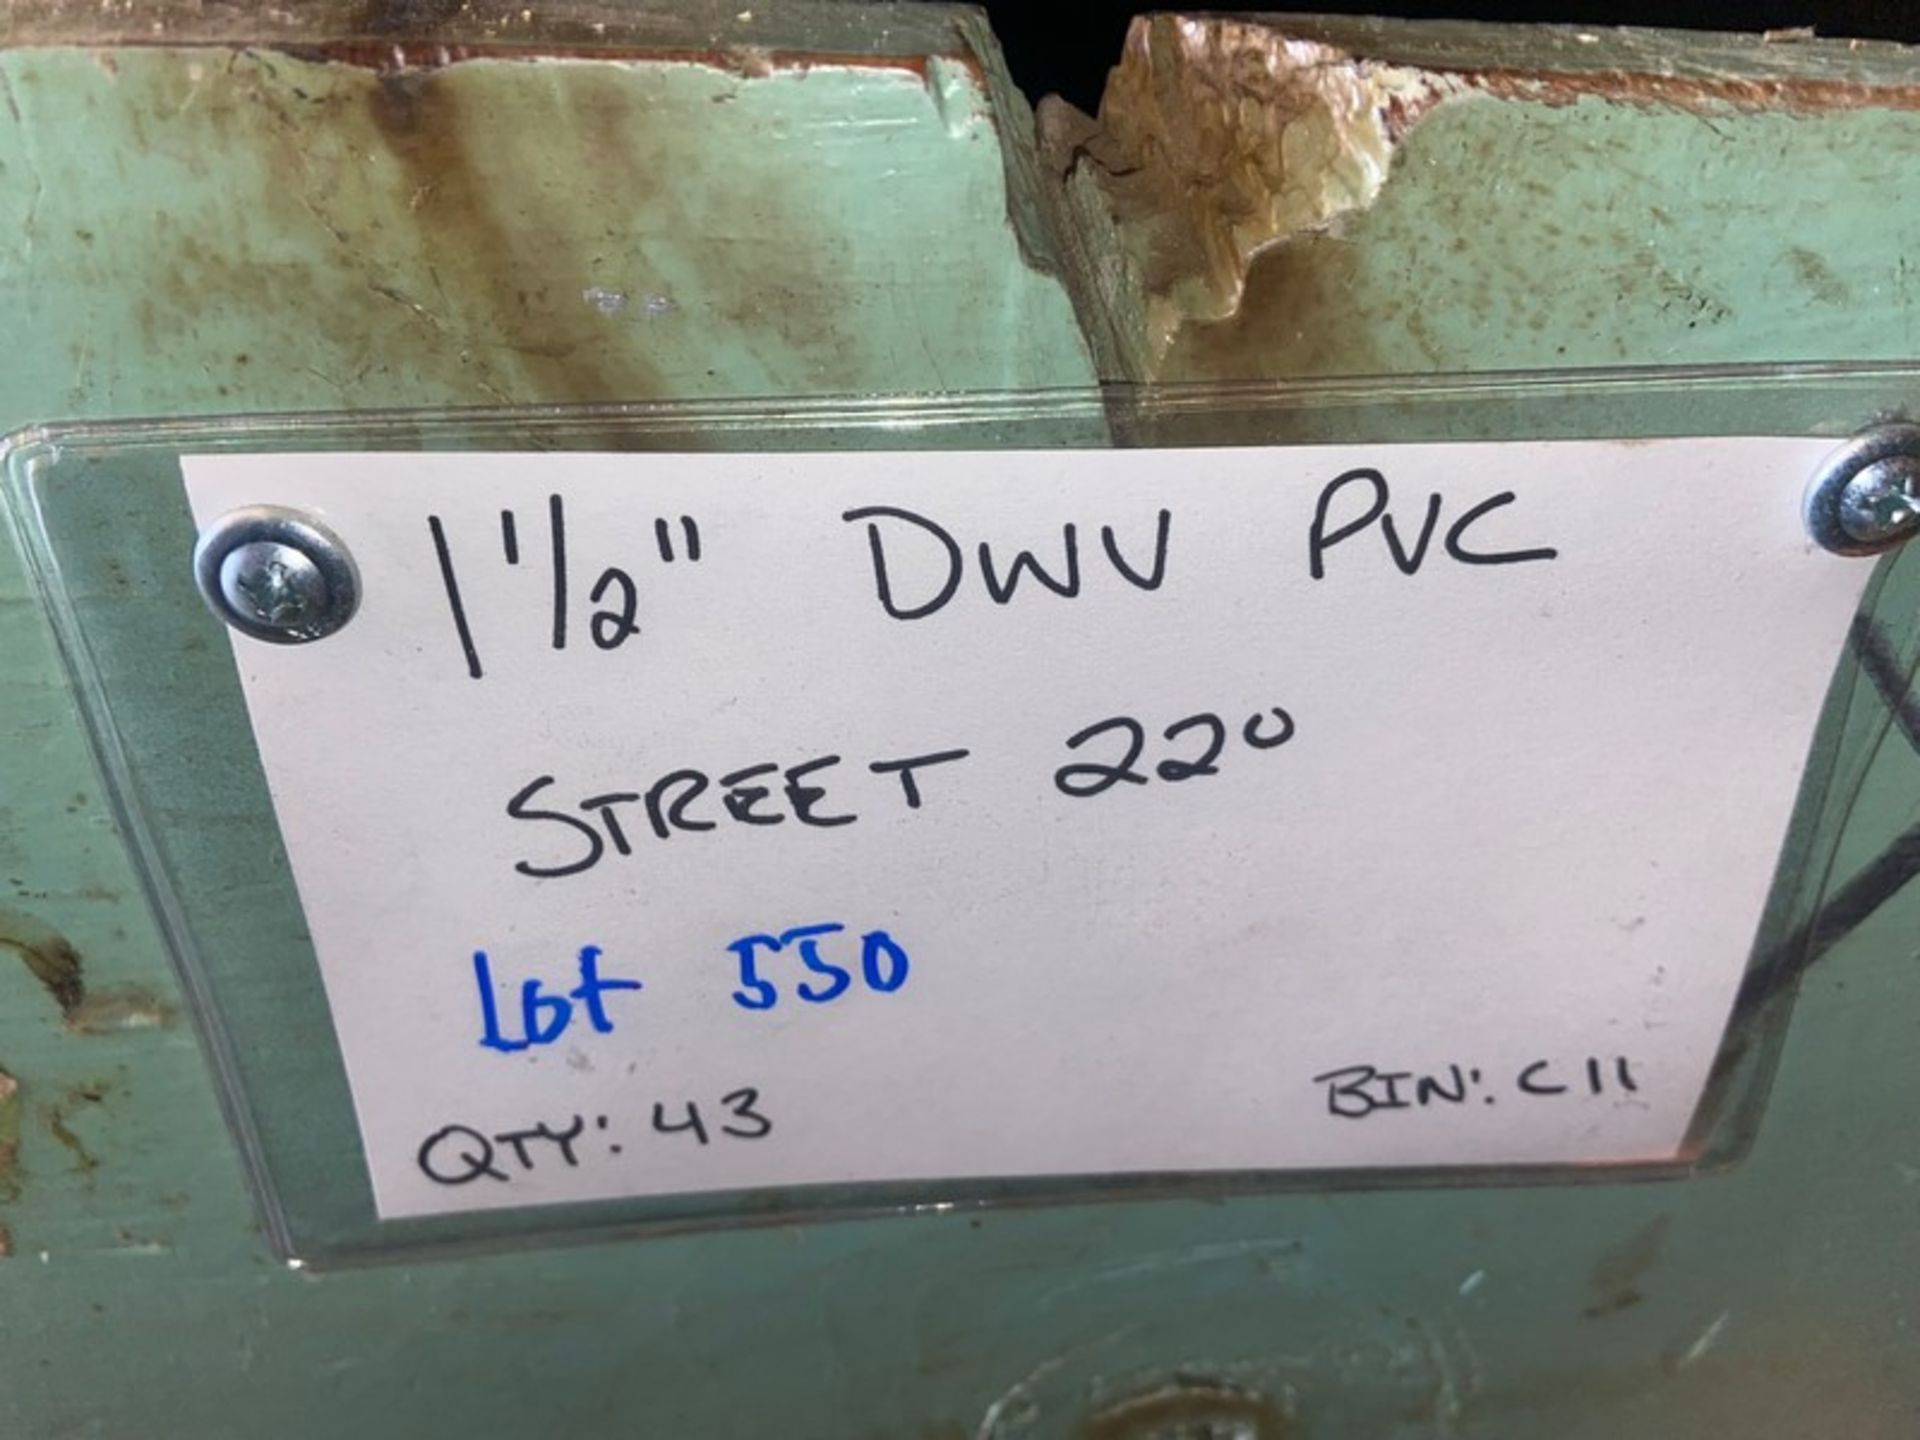 (43) 1 1/2 DWC PVC STREET 22’ (Bin:C11)(LOCATED IN MONROEVILLE, PA) - Bild 2 aus 4